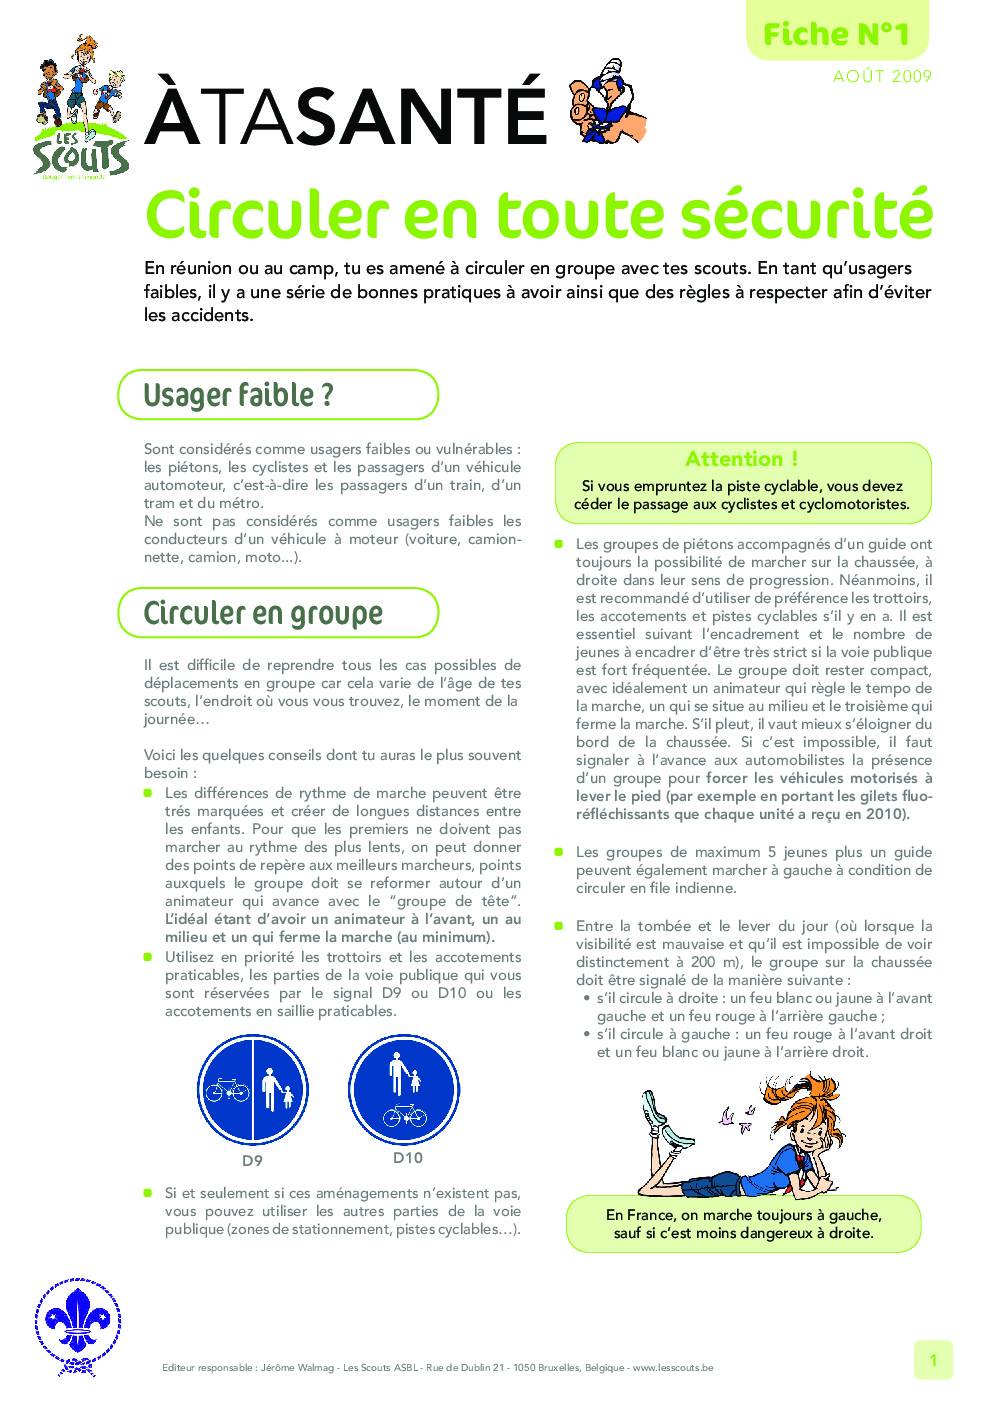 ATS_1_Circuler_en_toute_securite.pdf